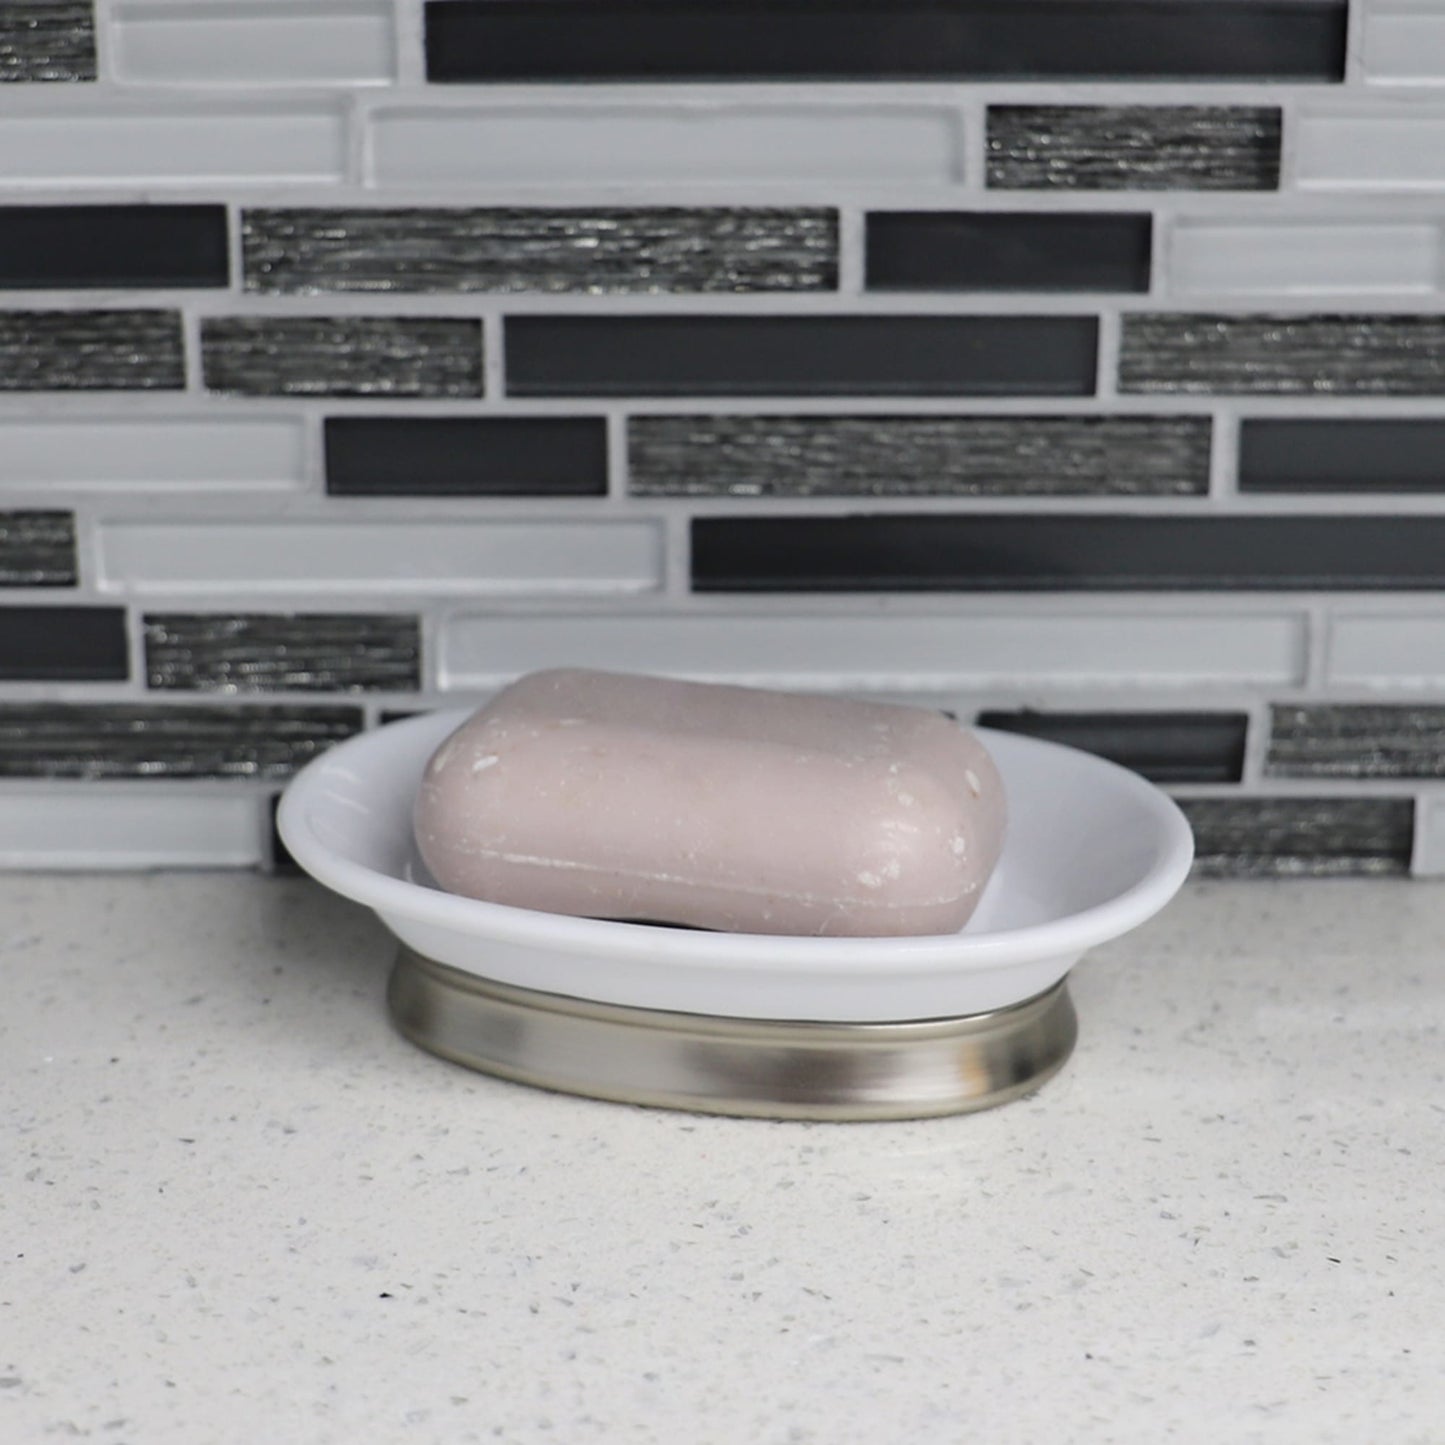 Rubberized Plastic Countertop  Pedestal  Soap Dish with  Non-Skid Metal Base, White